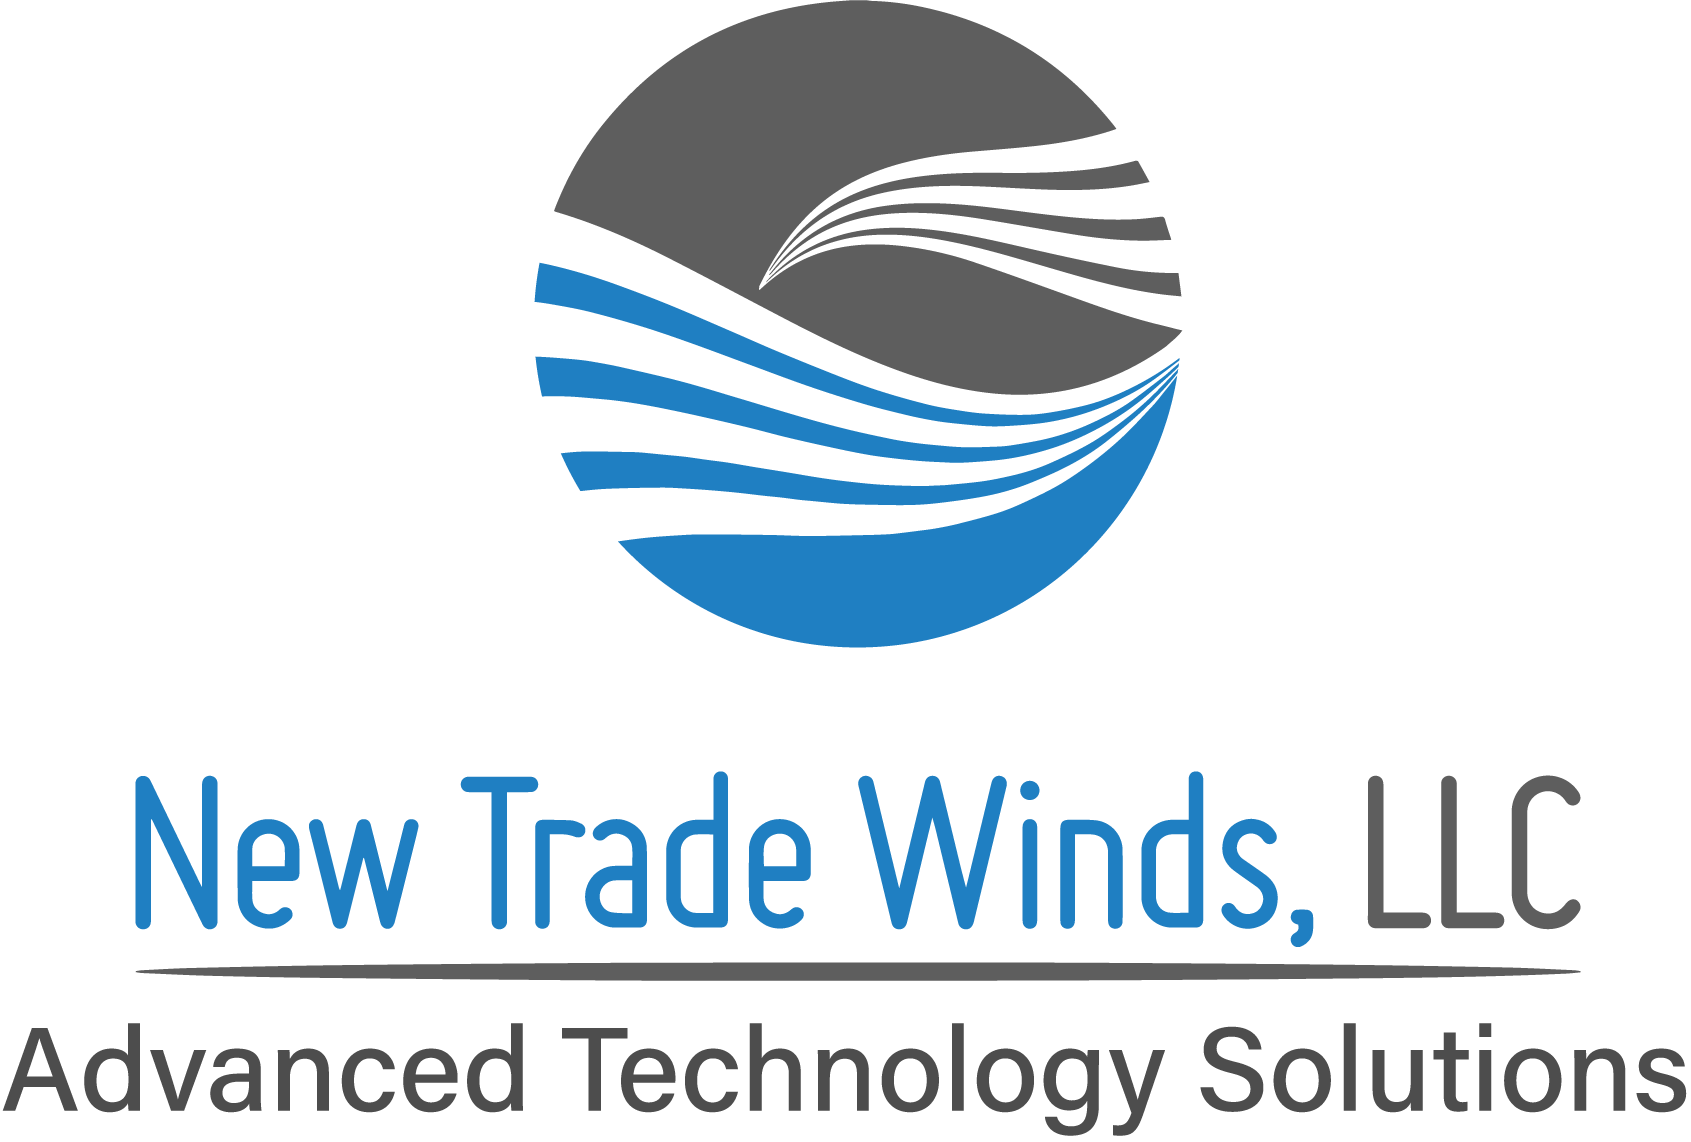 New Trade Winds LLC - transparent logo.png